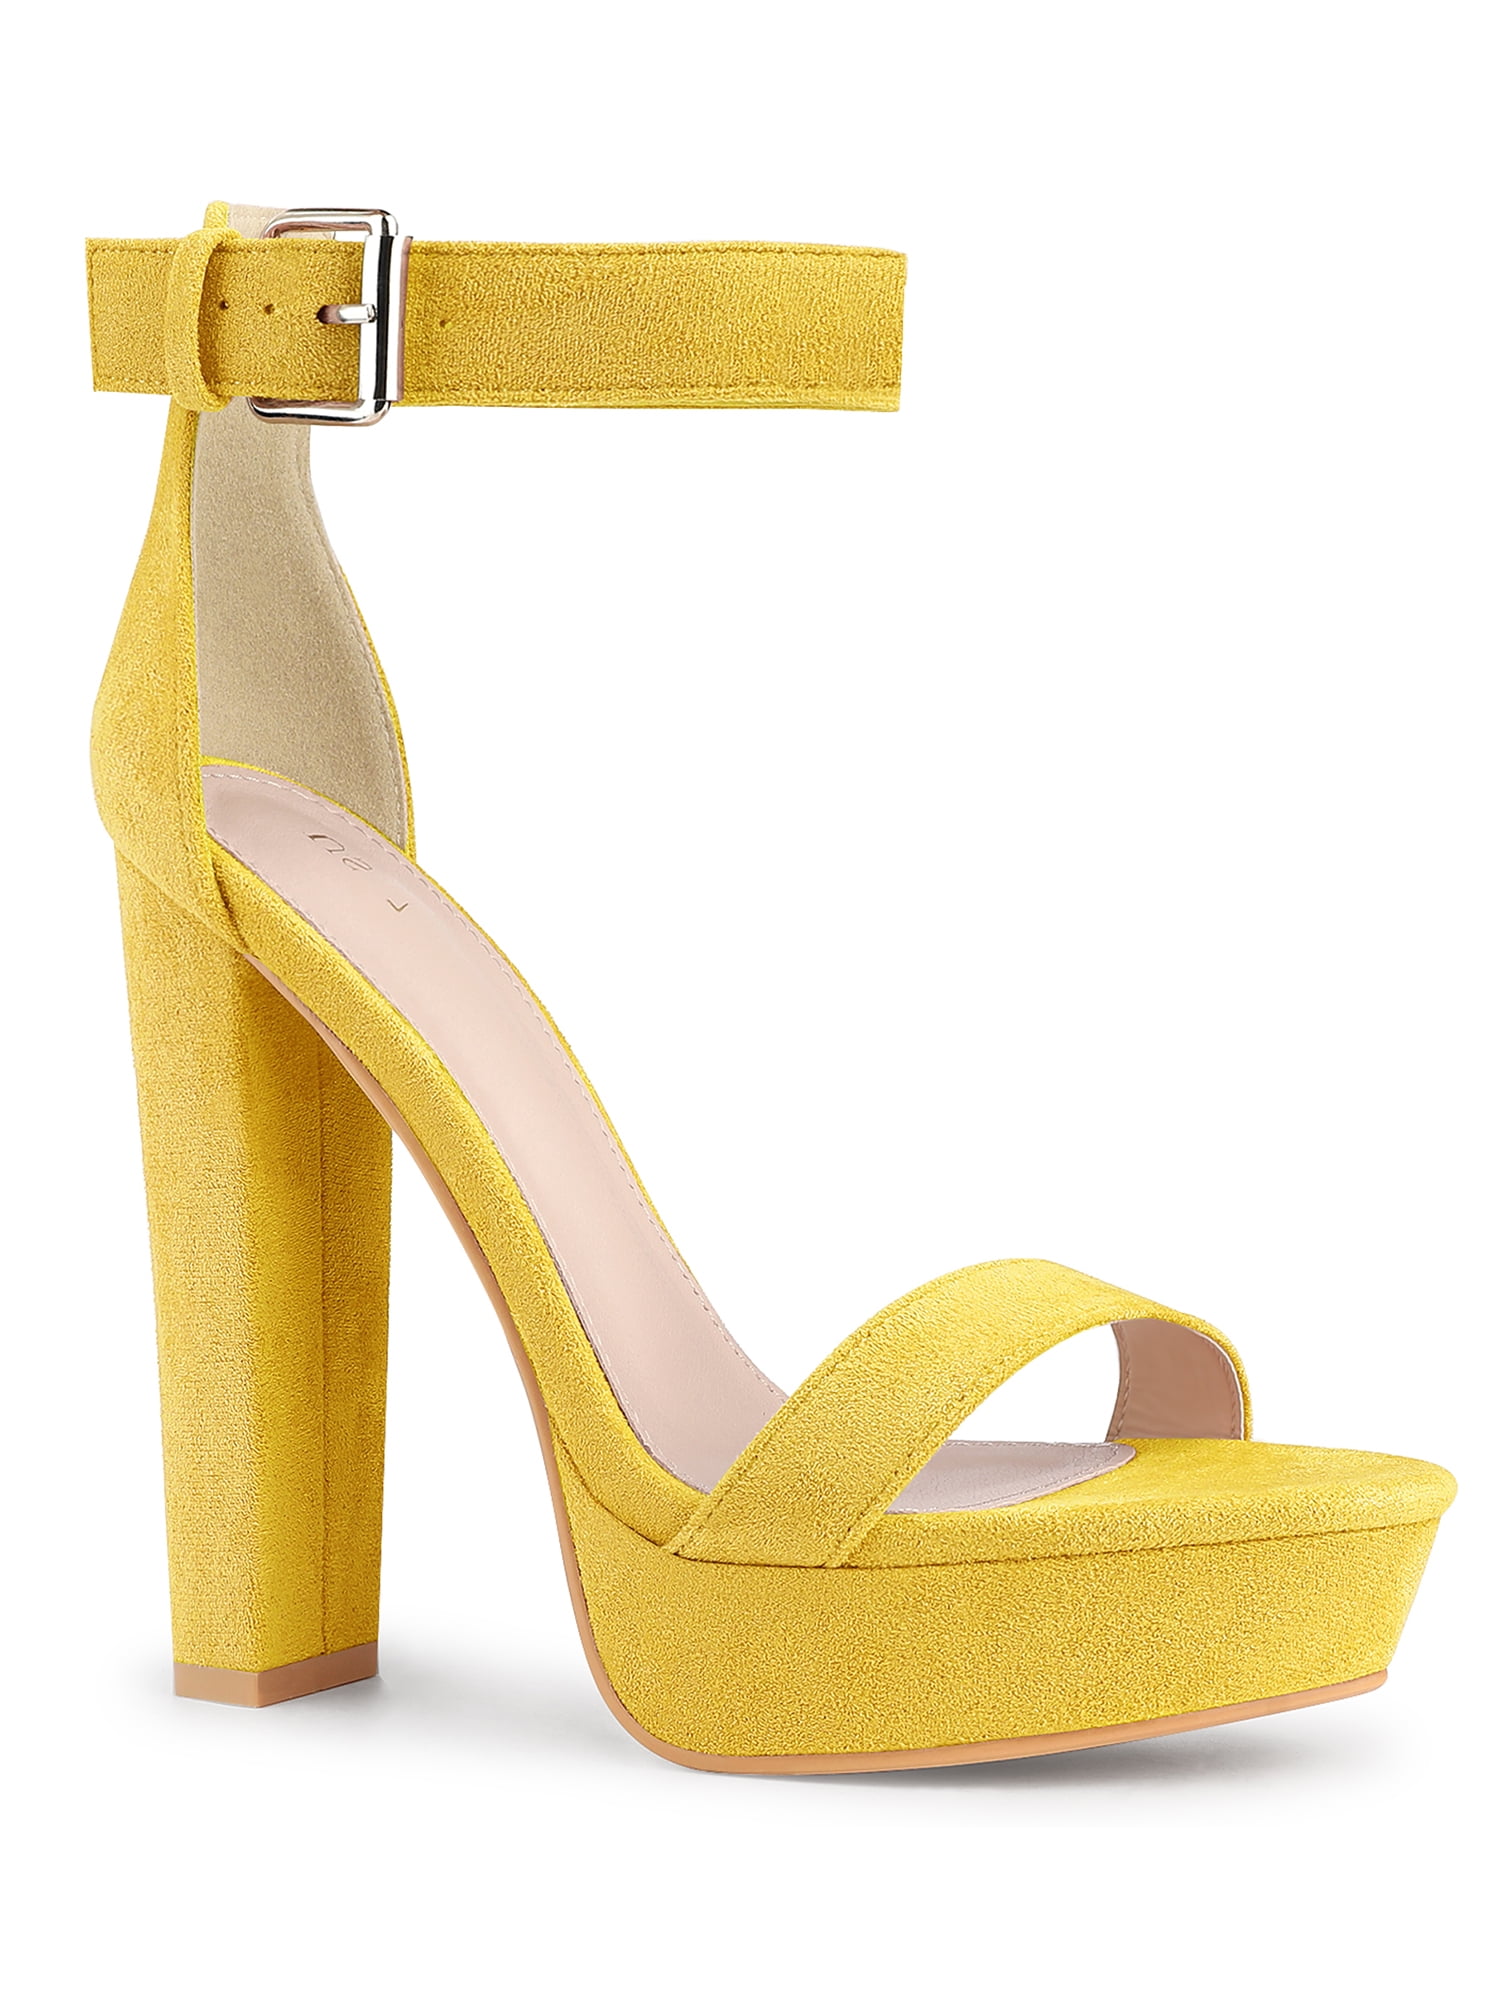 Sexy Yellow Heels - High Heels - Ankle Strap Heels - $33.00 - Lulus